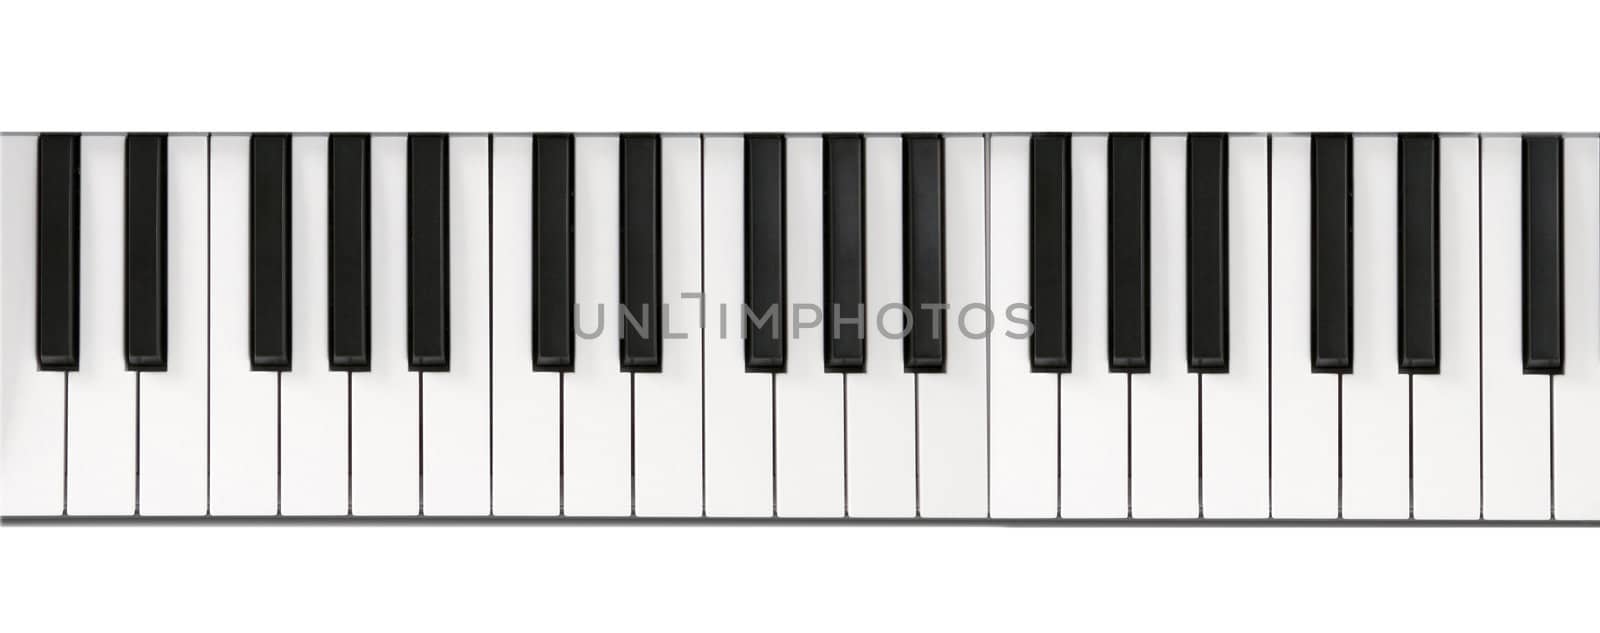 Piano keyboard close-up background